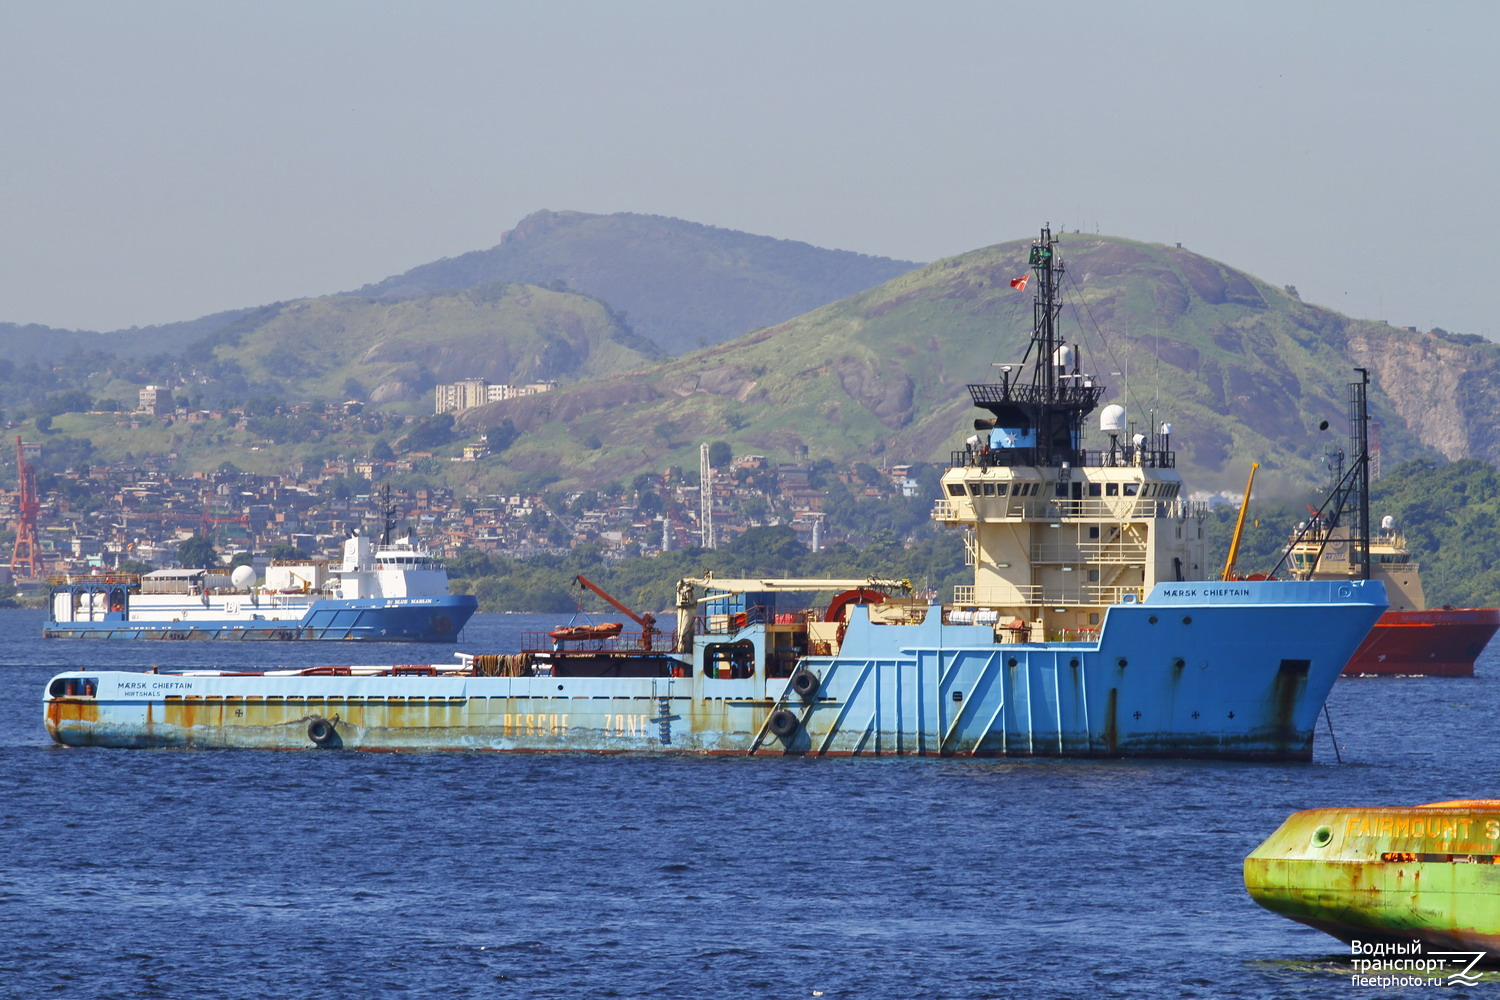 Maersk Chieftain, BJ Blue Marlin